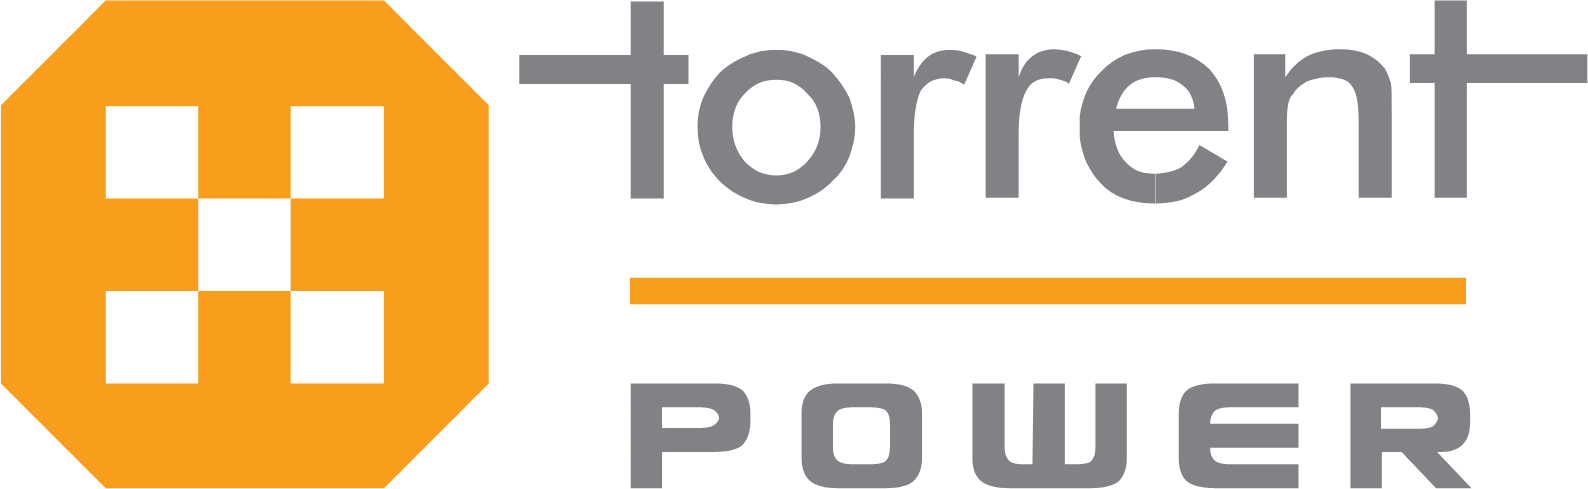 Torrent Power logo large (transparent PNG)